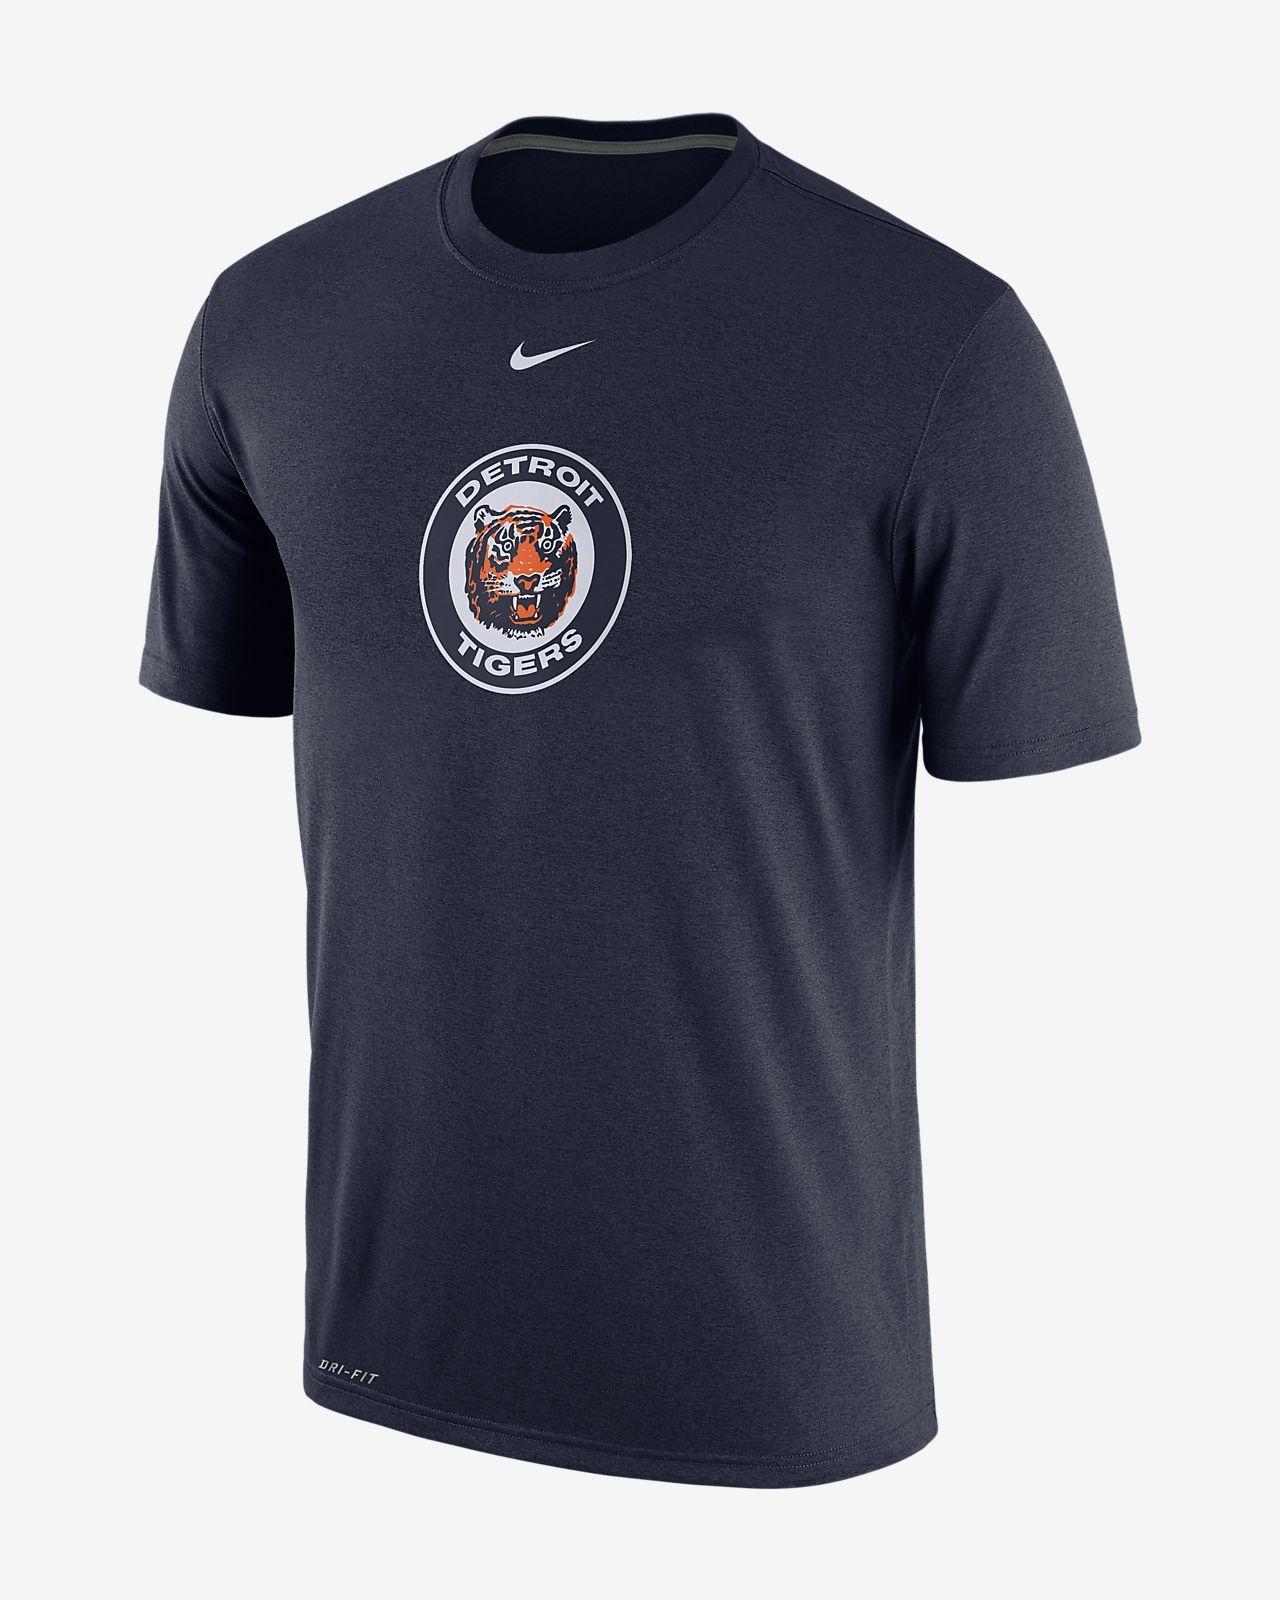 Tiger C Logo - Nike Logo Legend (MLB Tigers) Men's T Shirt. Nike.com